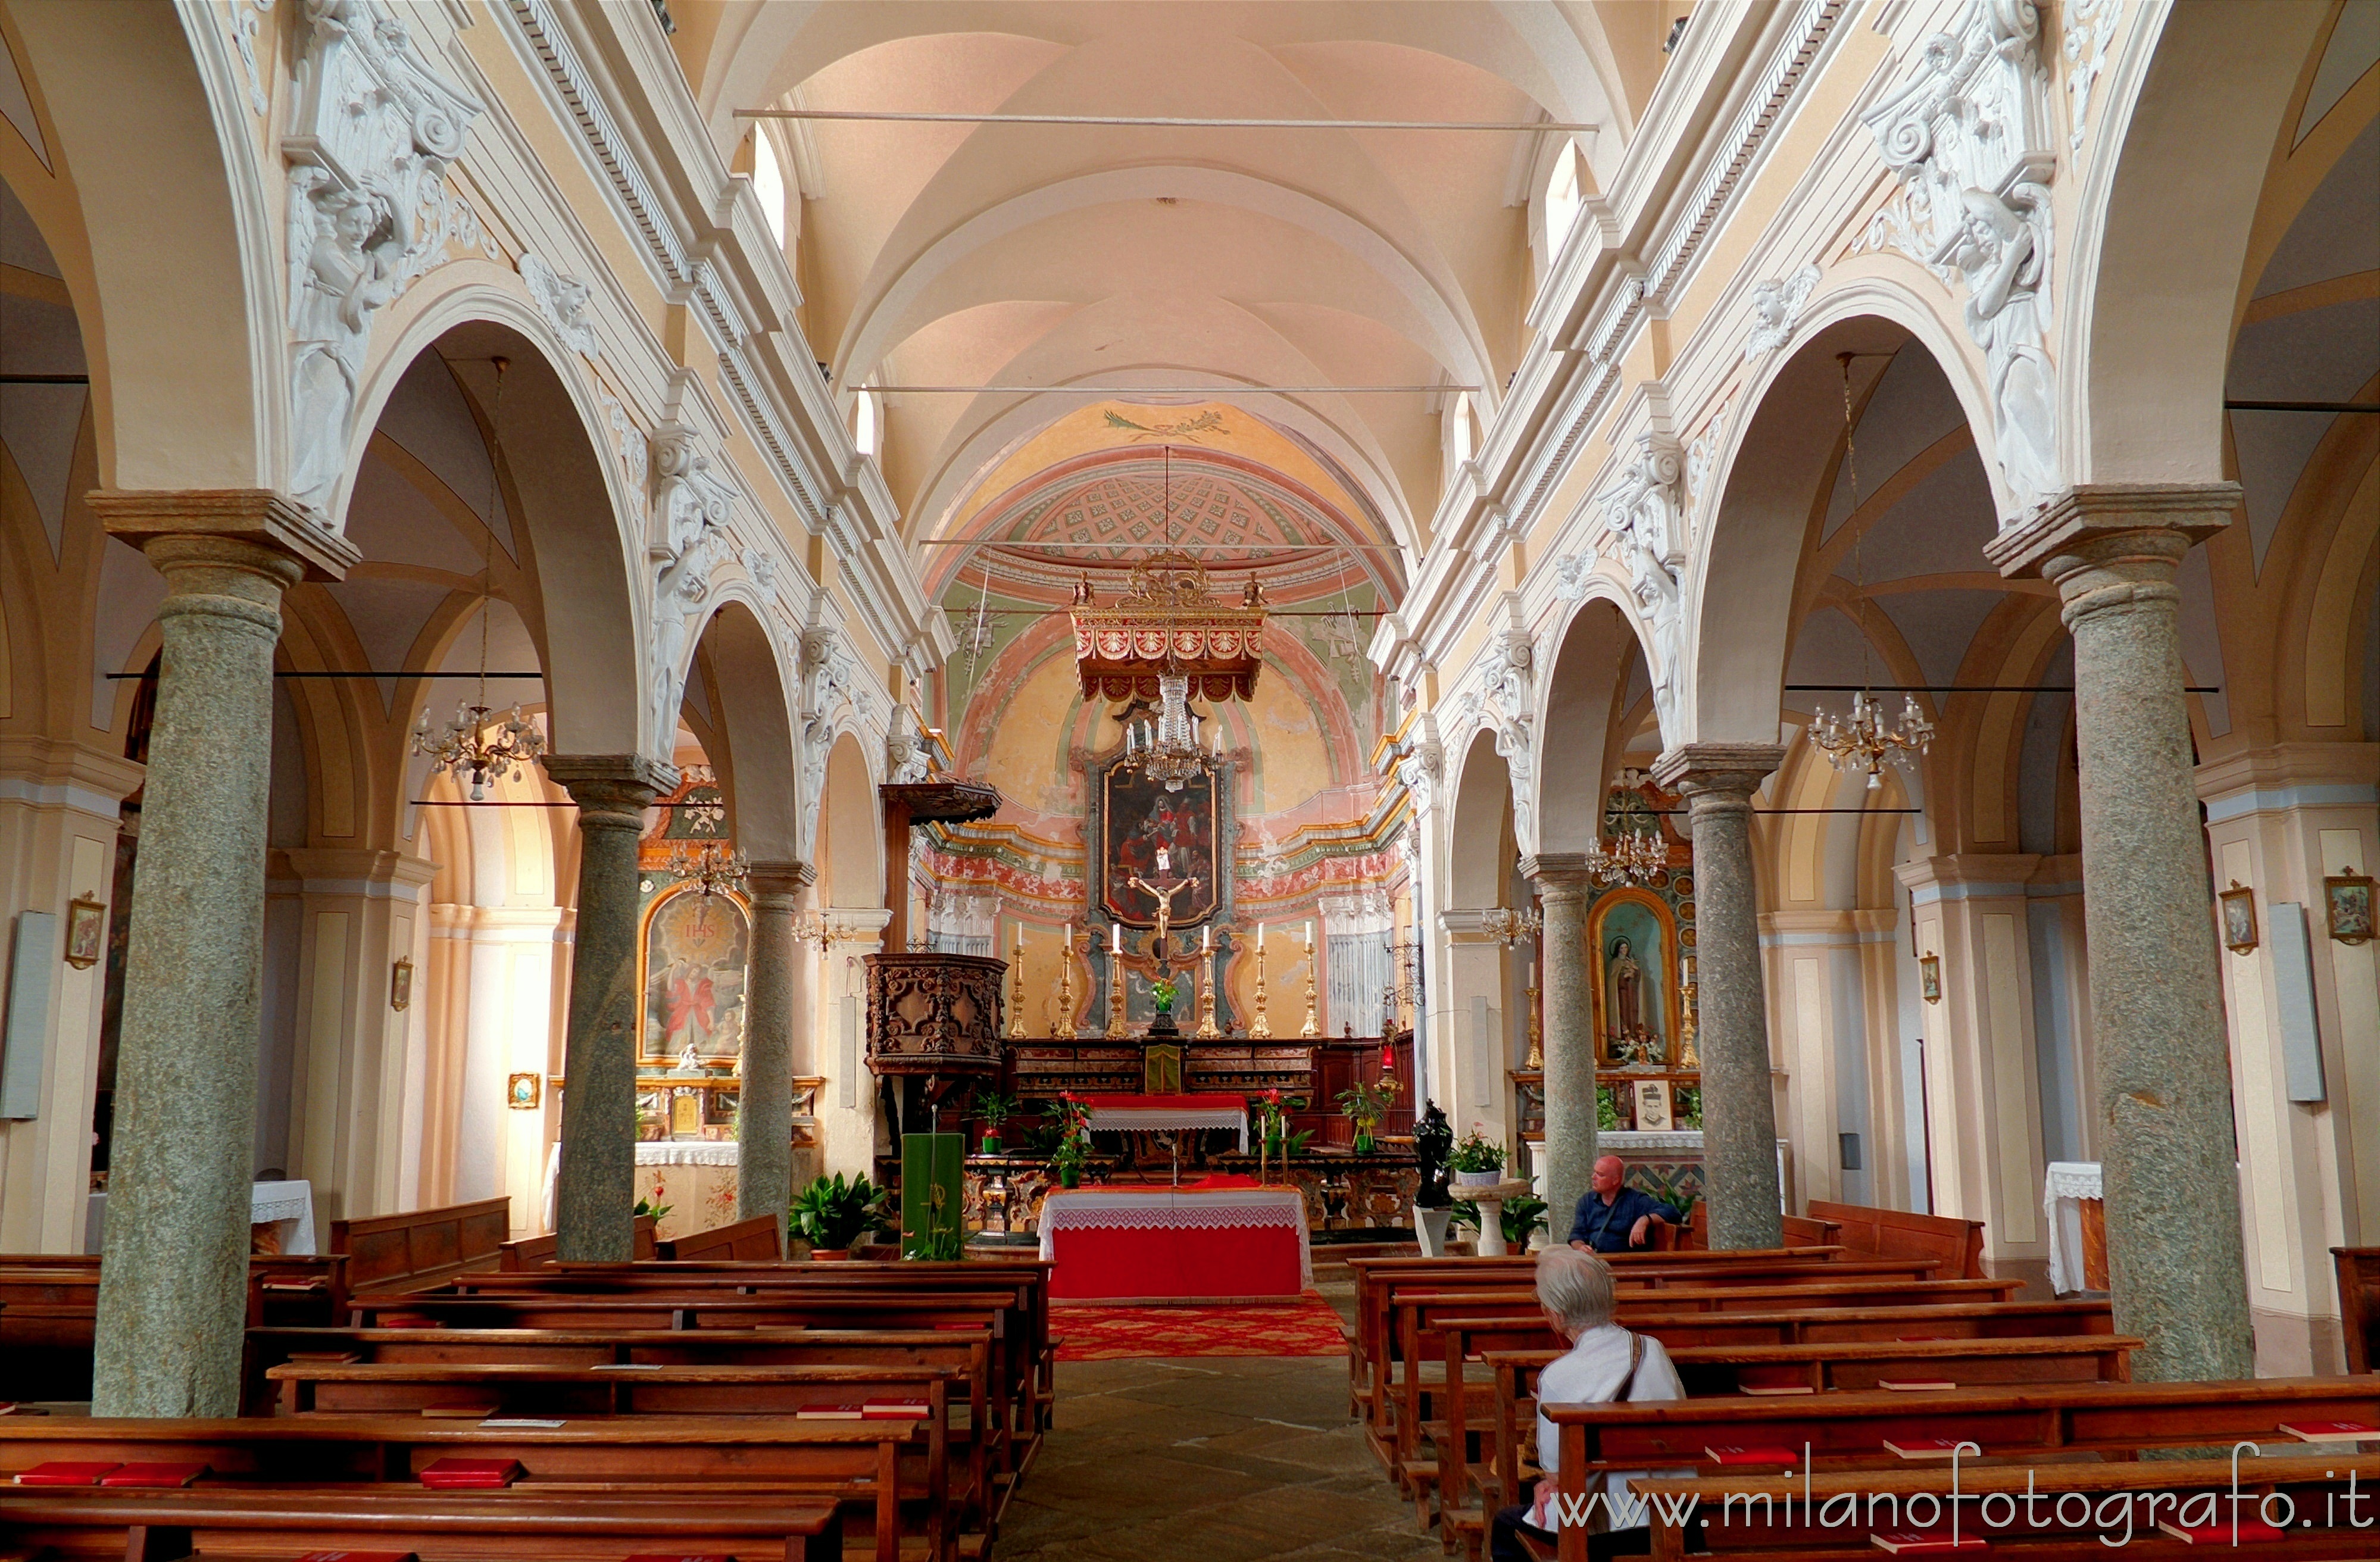 Magnano (Biella, Italy): Interior of the Parish Church of St. John the Baptist and San Secondus - Magnano (Biella, Italy)